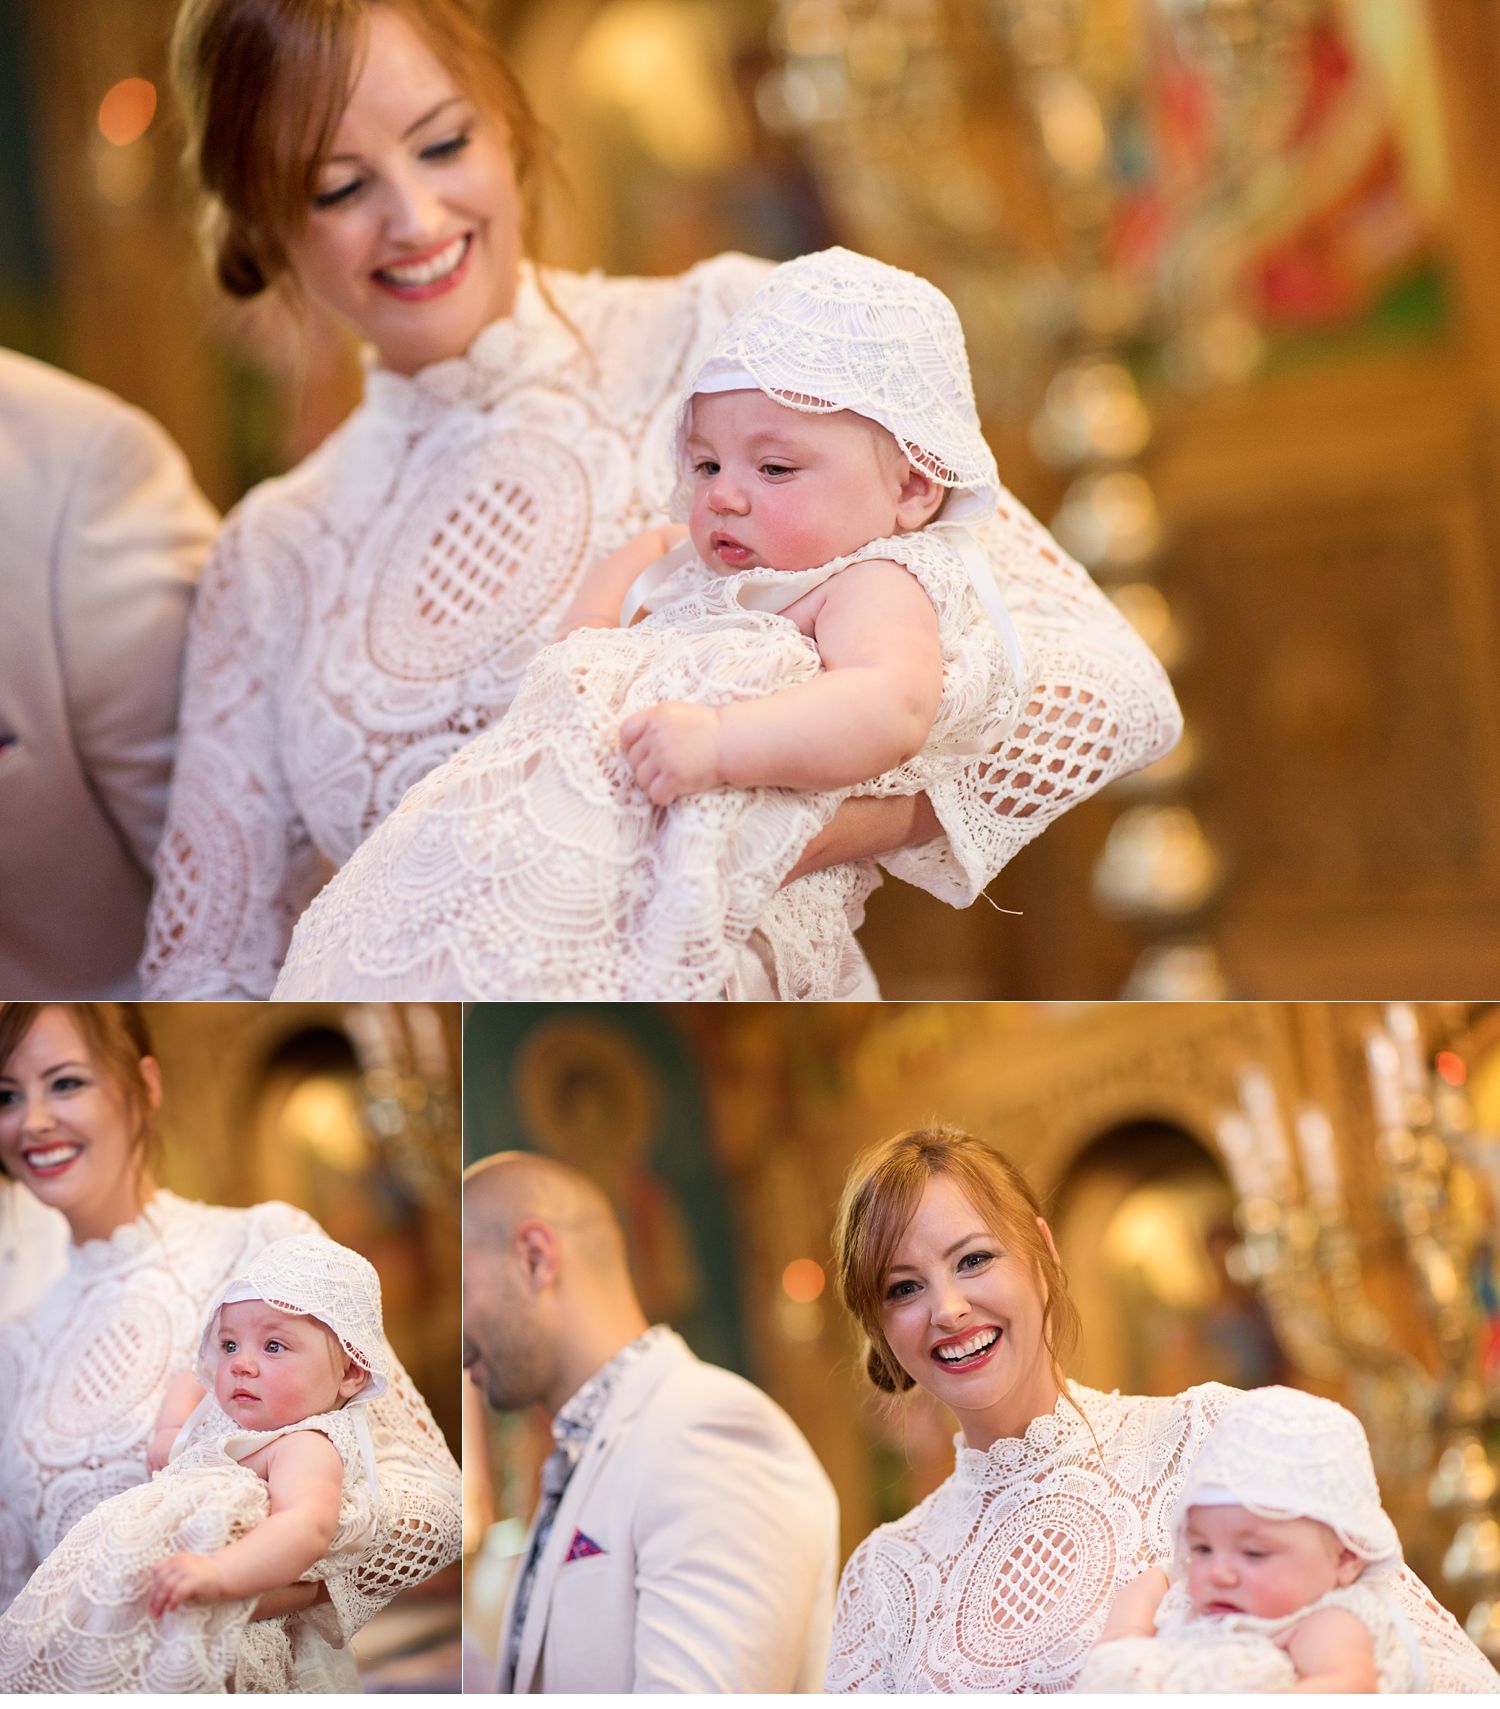 baby-natural-christening-baptism-photographer-melbourne-bec-stewart-lifestyle-photography-24.jpg